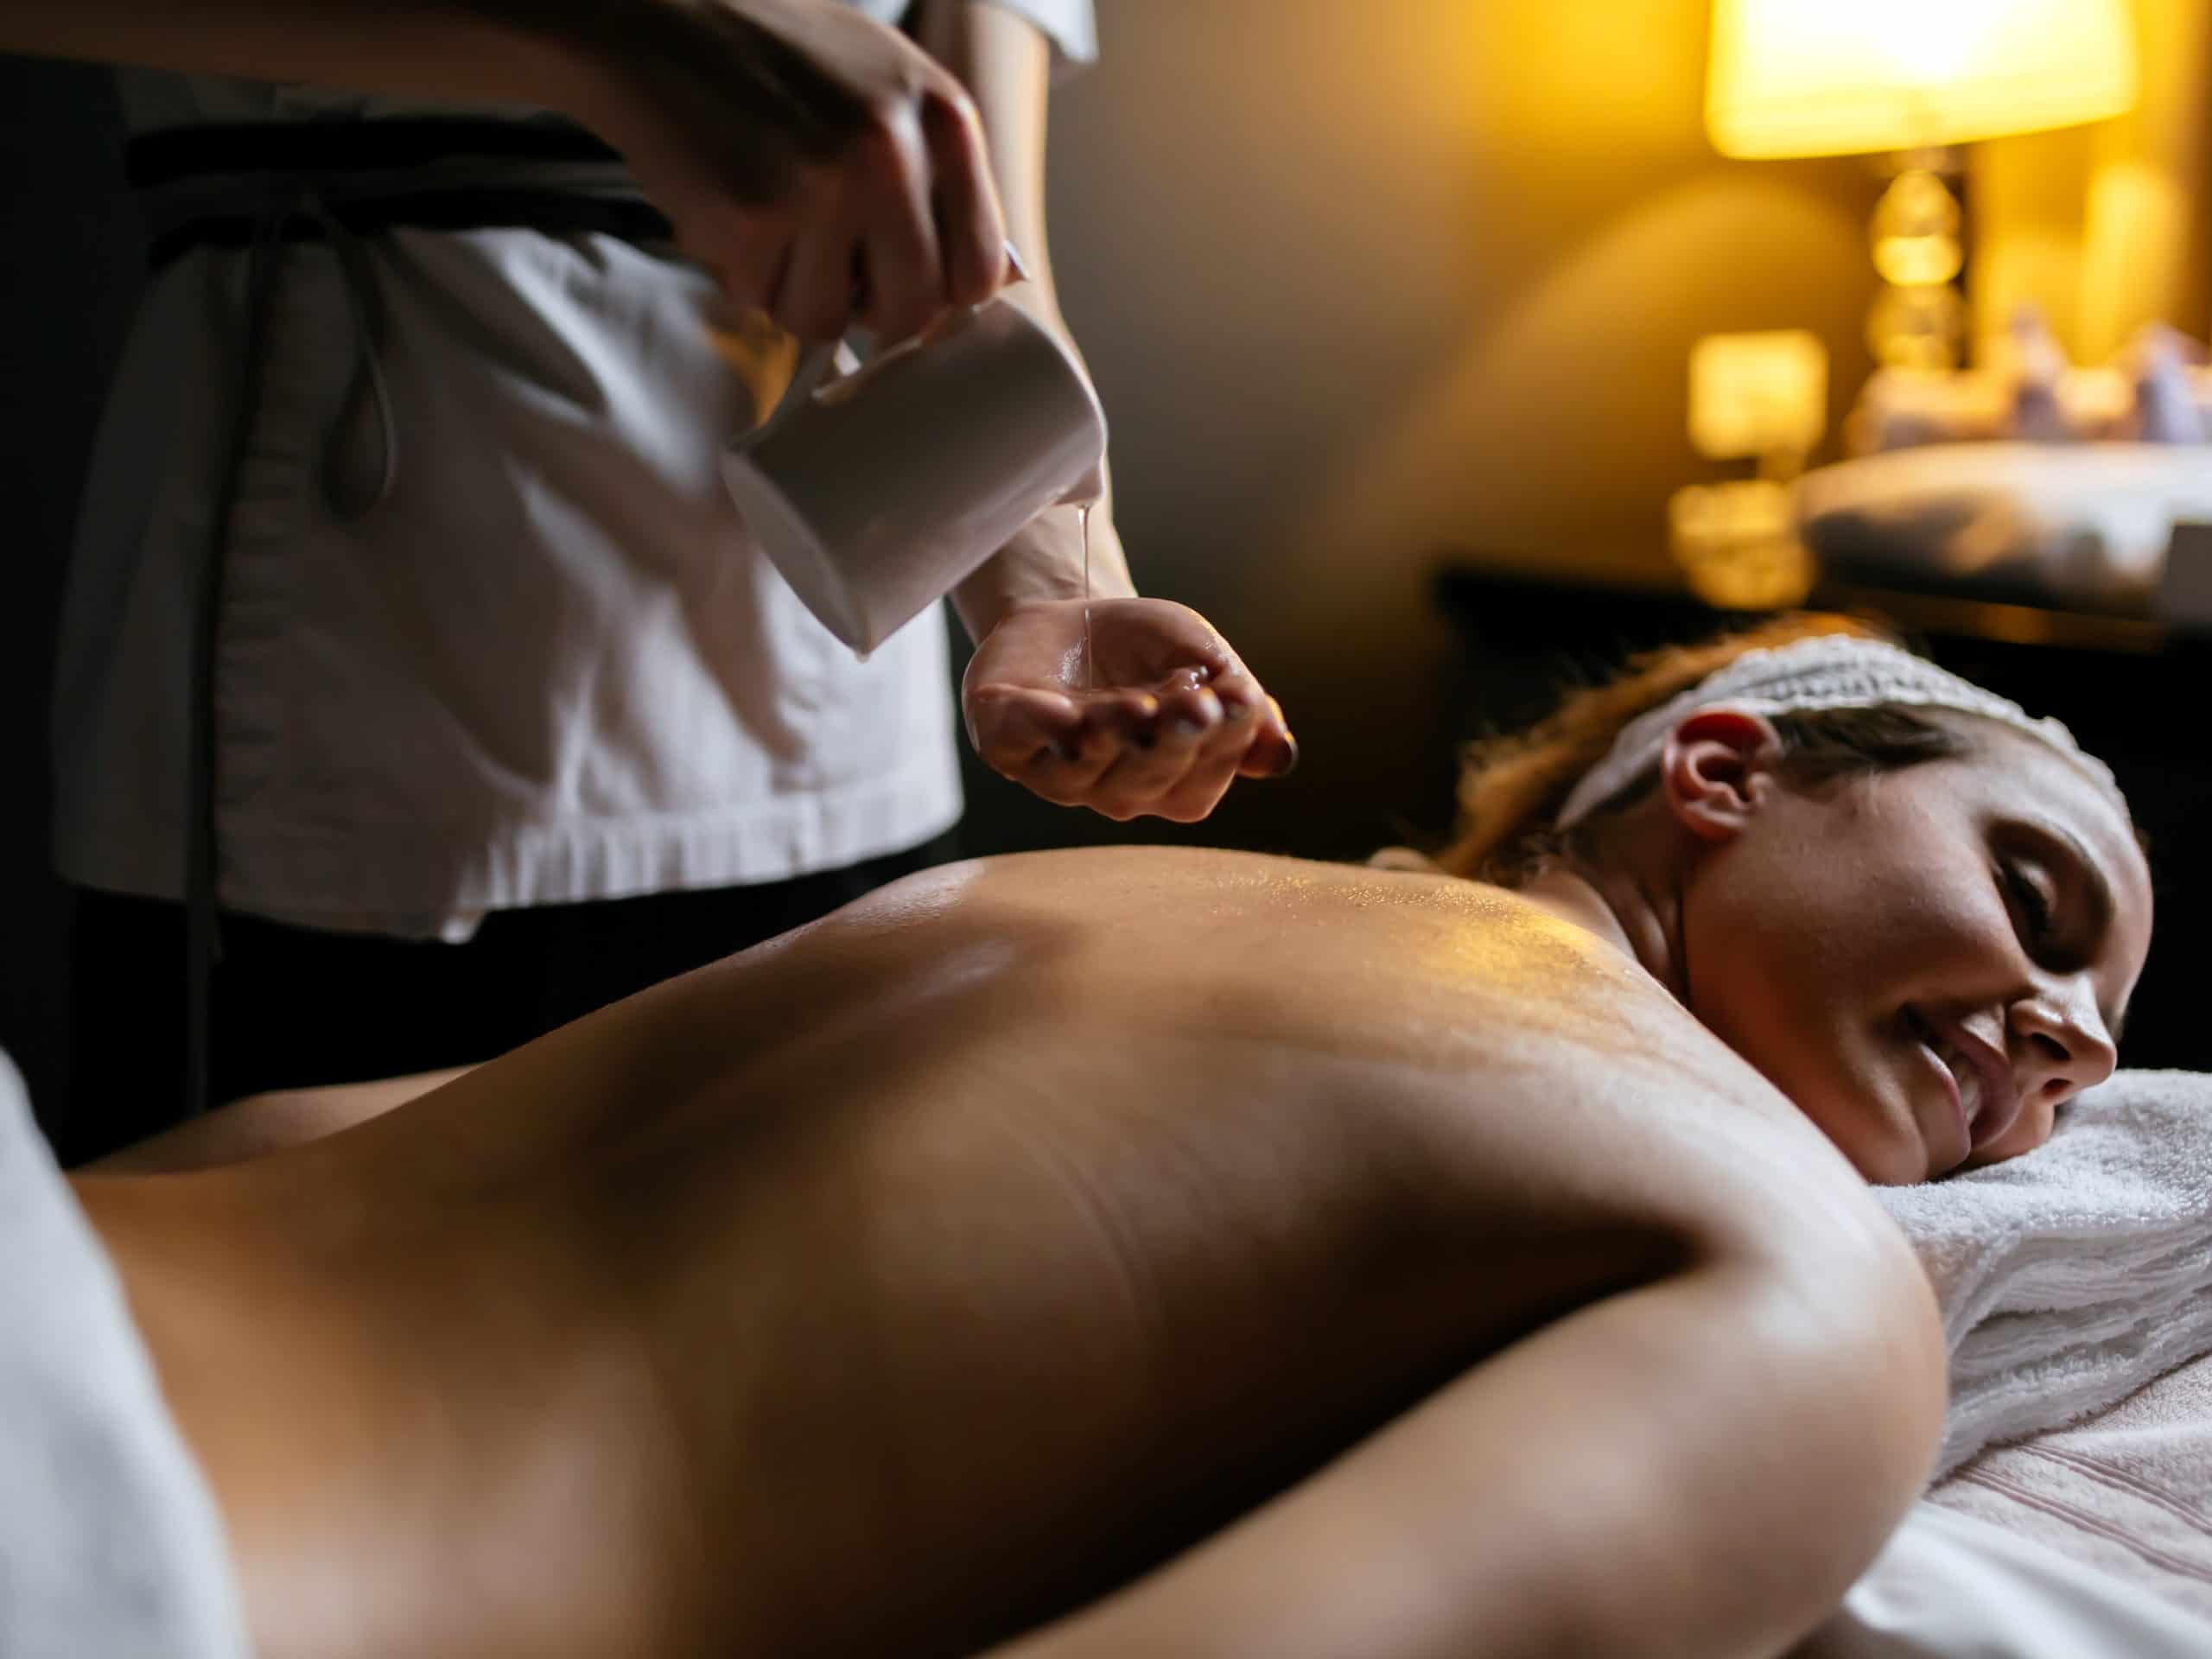 Oil massage treatment for a beautiful brunette